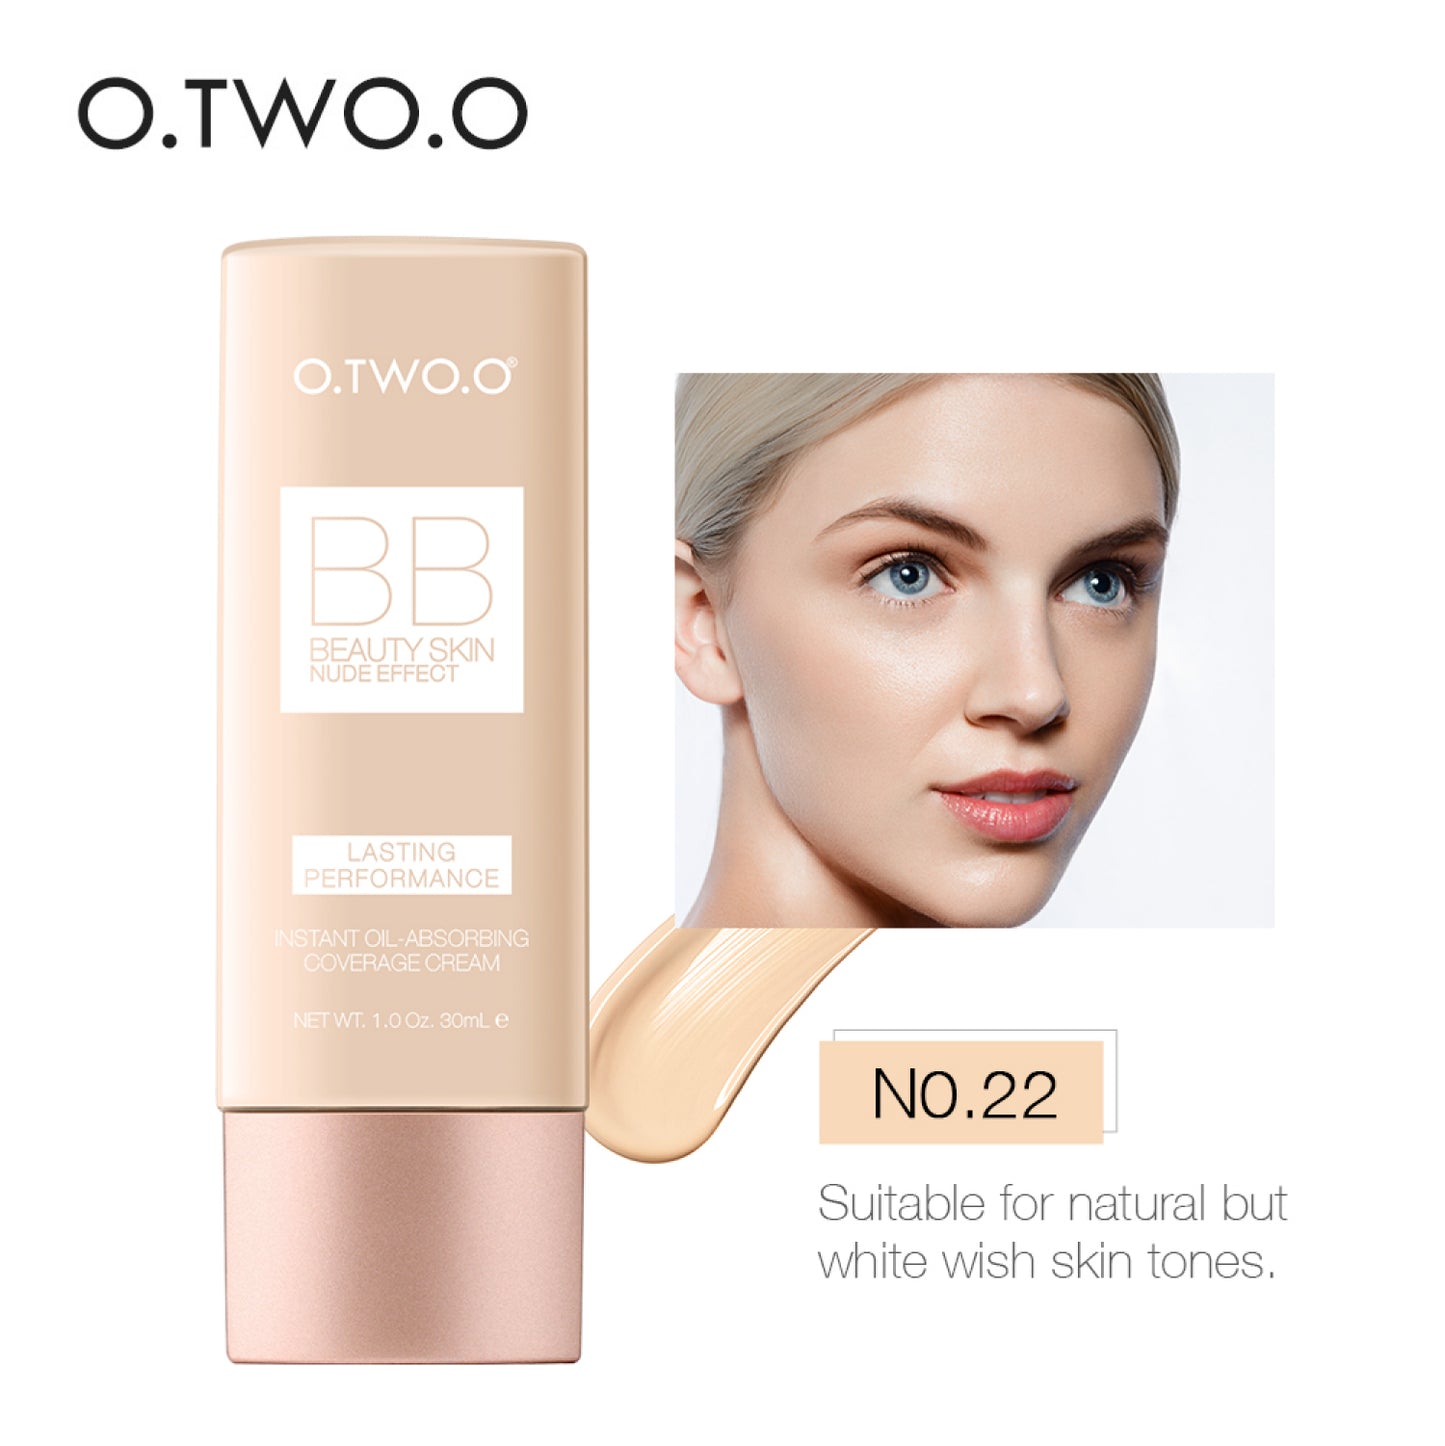 O.TWO.O Beauty Skin Nude Effect BB Cream